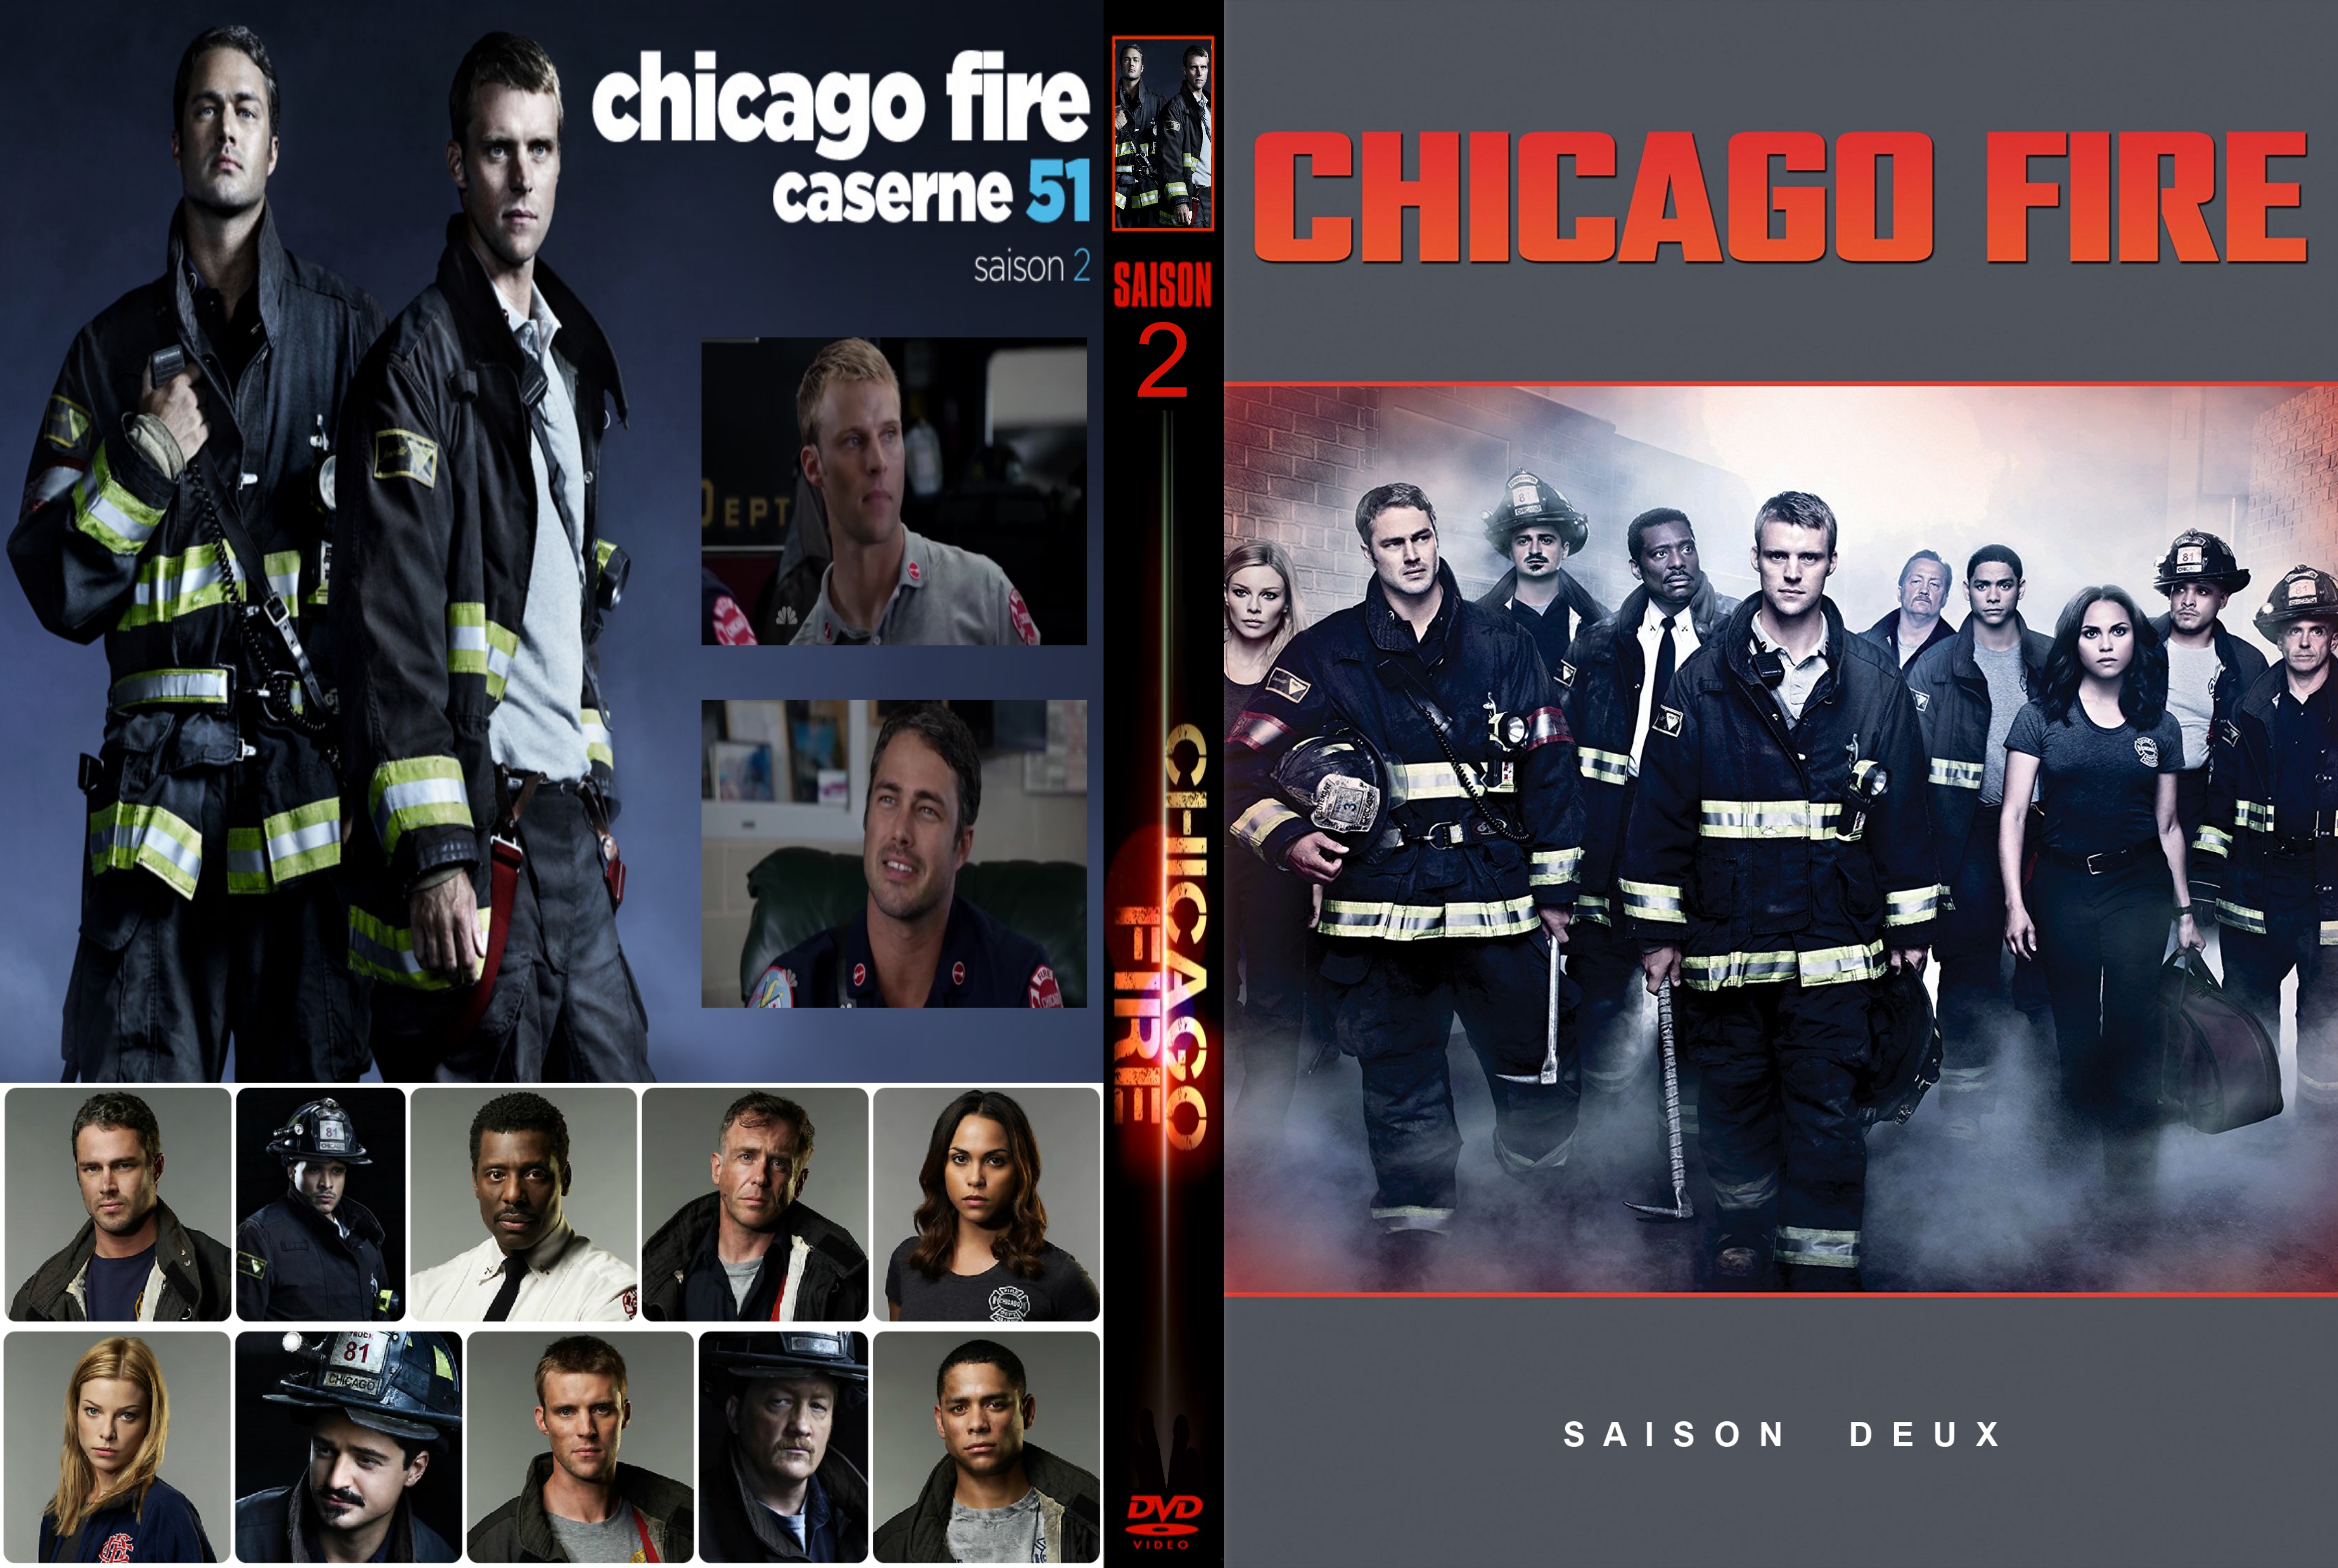 Jaquette DVD Chicago Fire Saison 2 custom